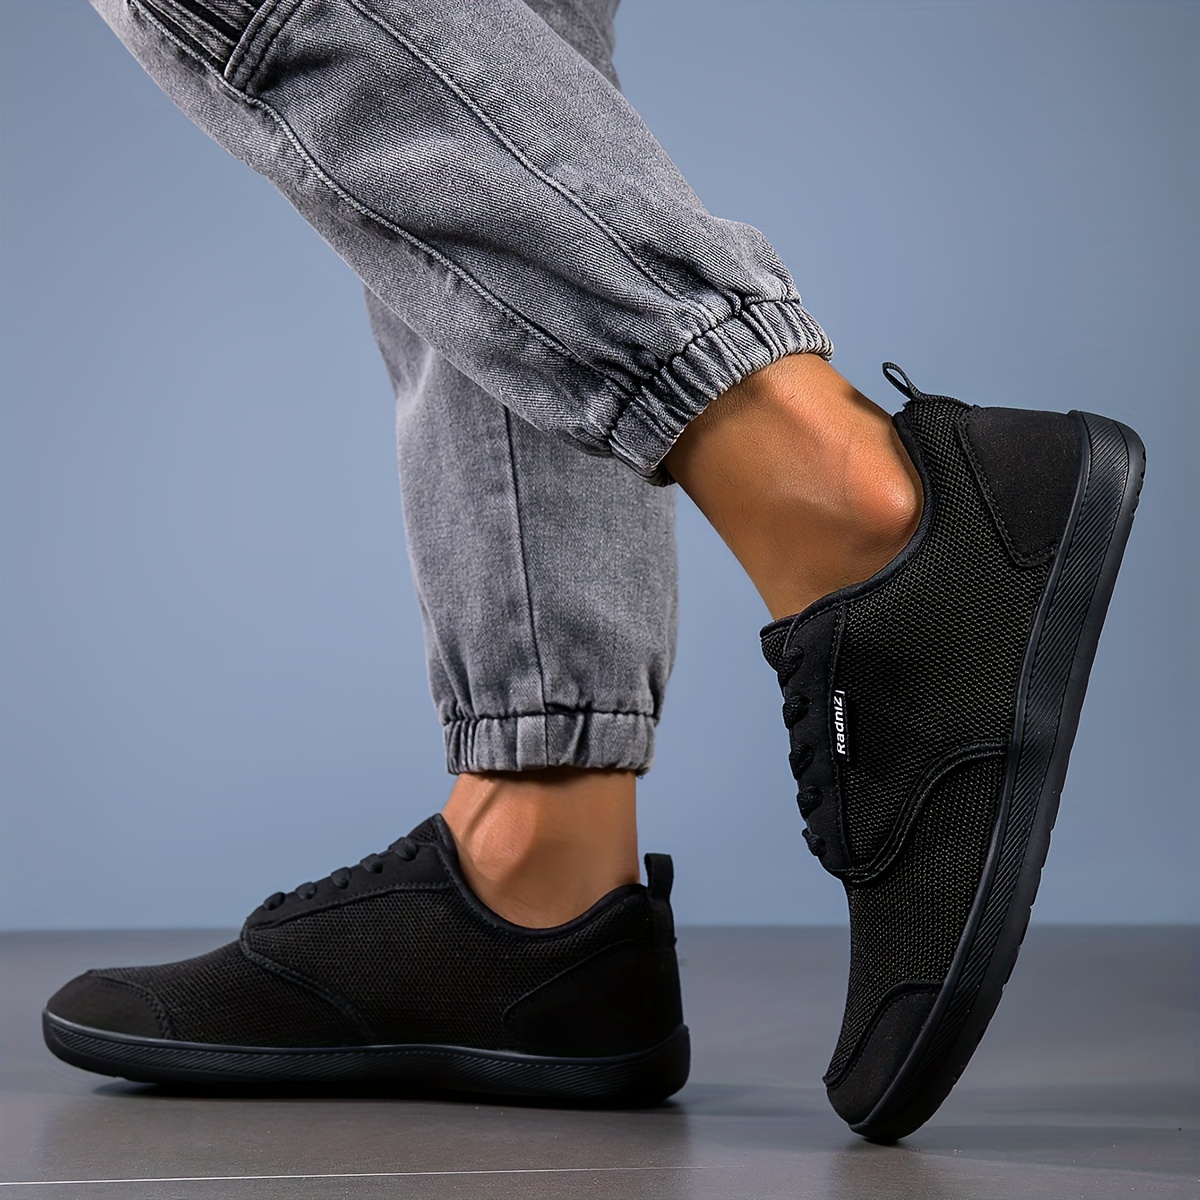 solid versatile sneakers men s minimalist style round toe details 5